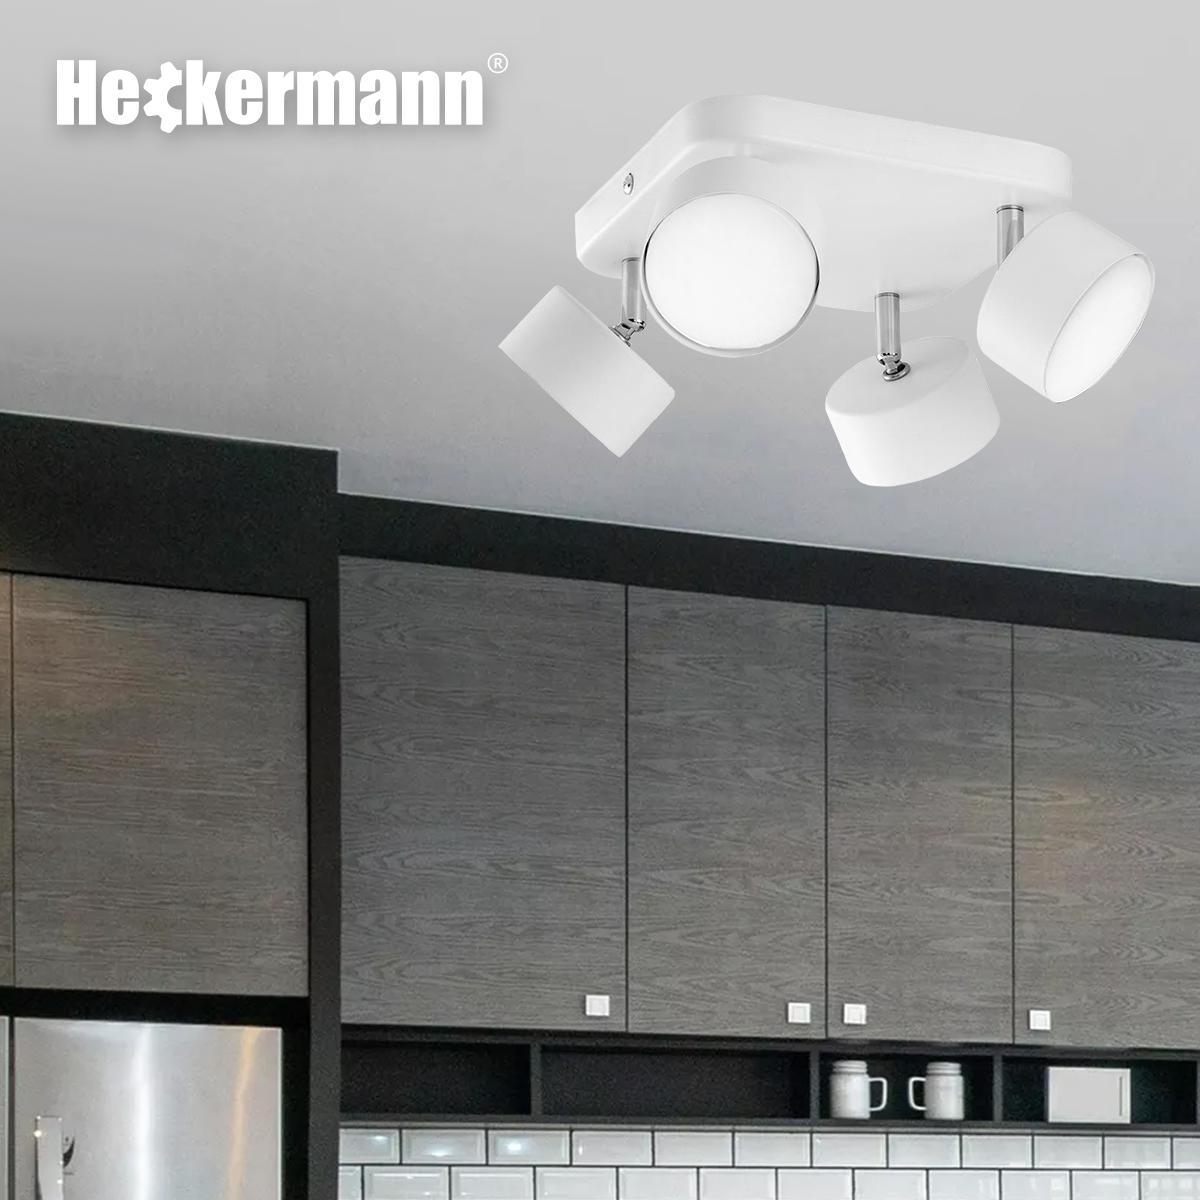 Lampa sufitowa punktowa LED Heckermann 8795318A Biała 4x głowica + 4x Żarówka LED GX53 7W Neutral 4 Full Screen